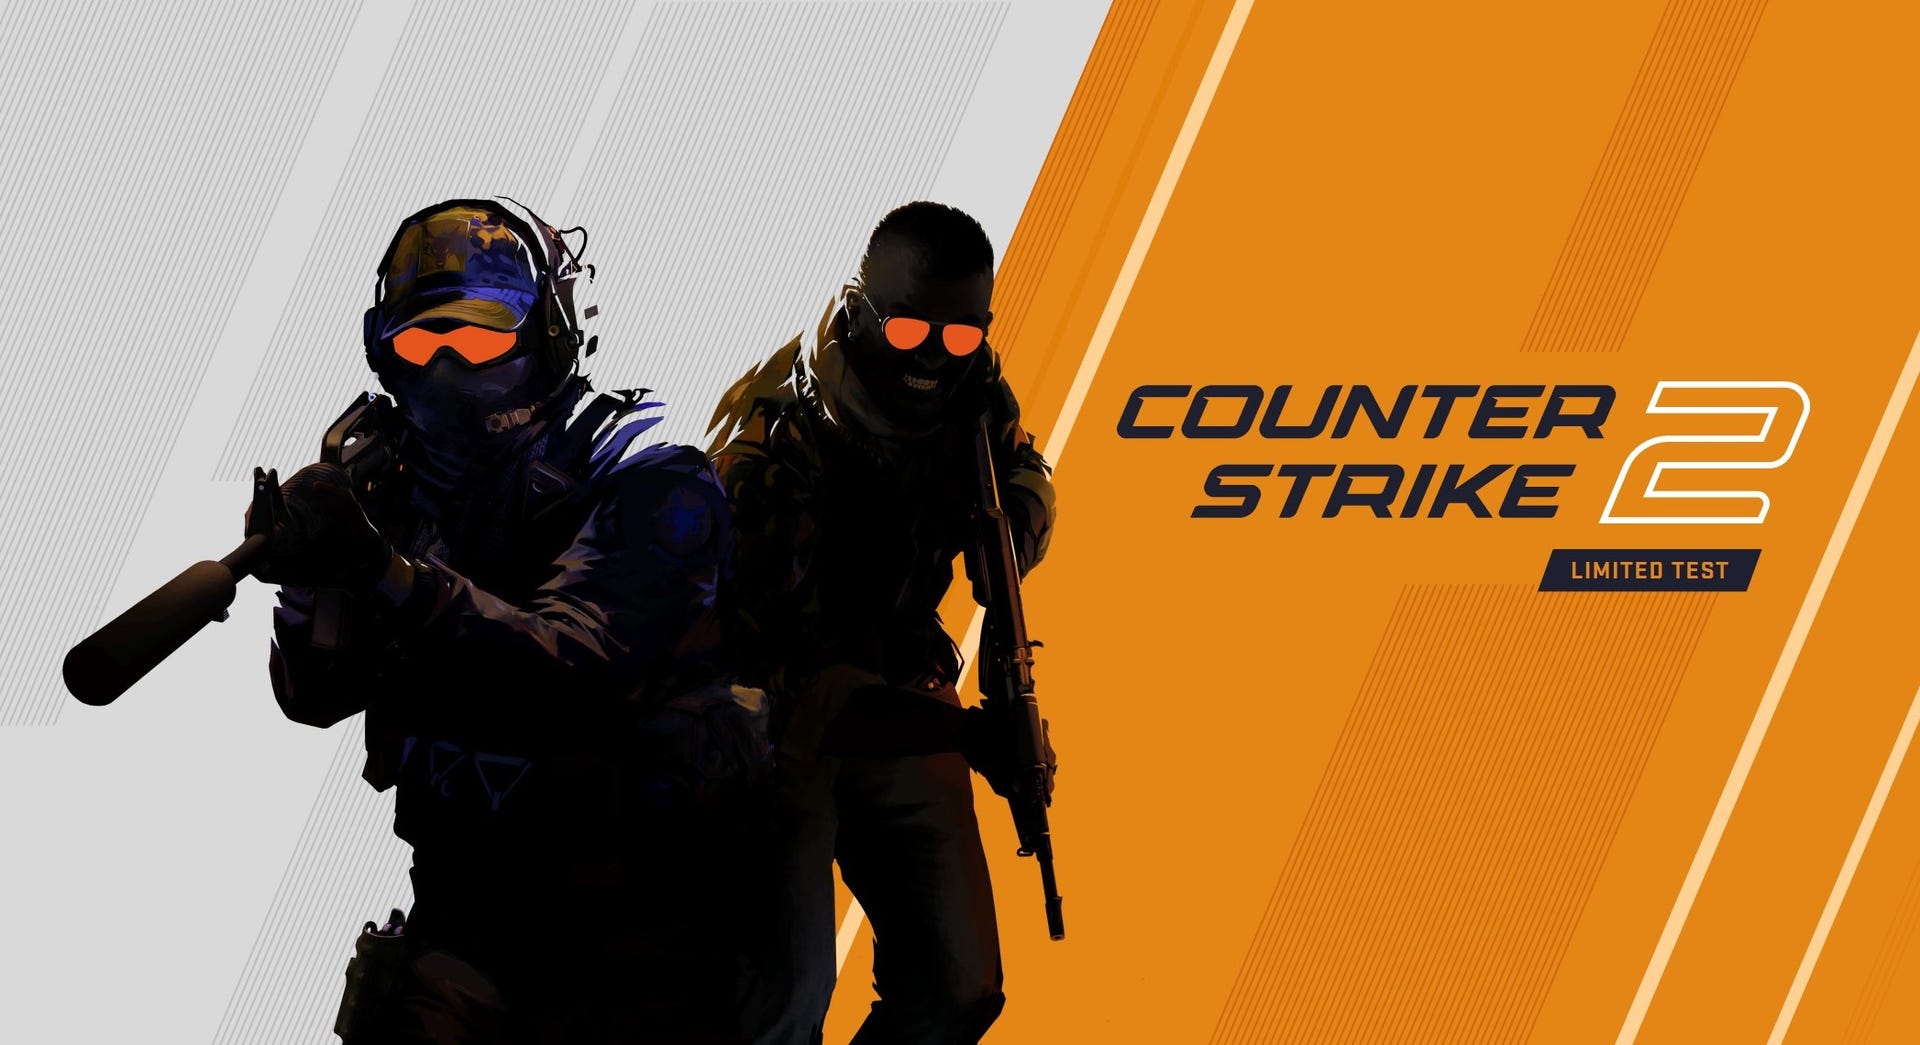 Is Counter Strike 2 release date coming next week, or is Valve trolling us?